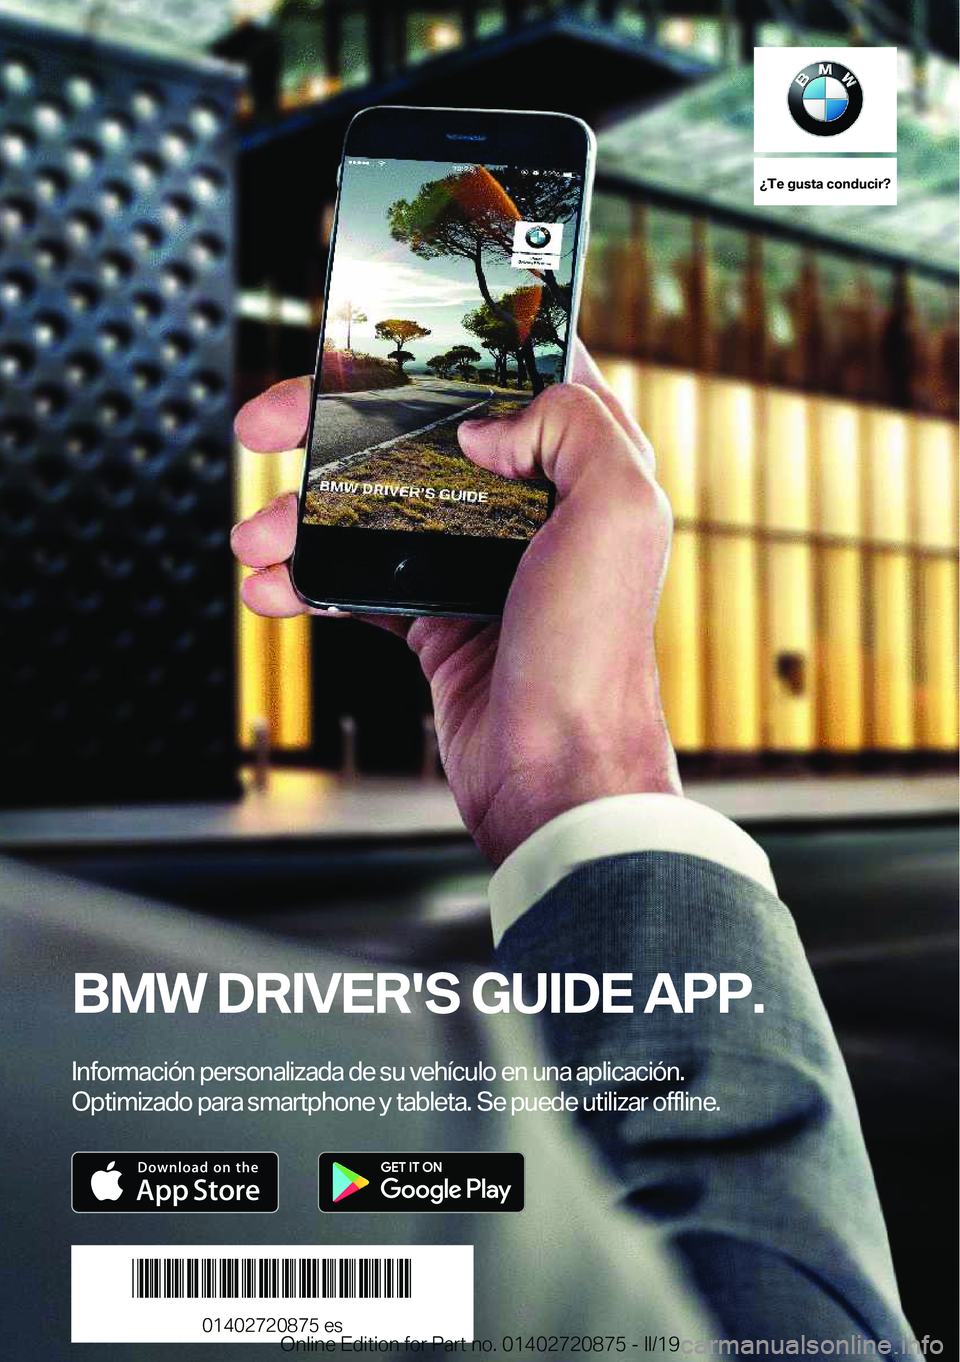 BMW X7 2019  Manuales de Empleo (in Spanish) ��T�e��g�u�s�t�a��c�o�n�d�u�c�i�r� 
�B�M�W��D�R�I�V�E�R�'�S��G�U�I�D�E��A�P�P�.�*�n�f�o�r�m�a�c�i�